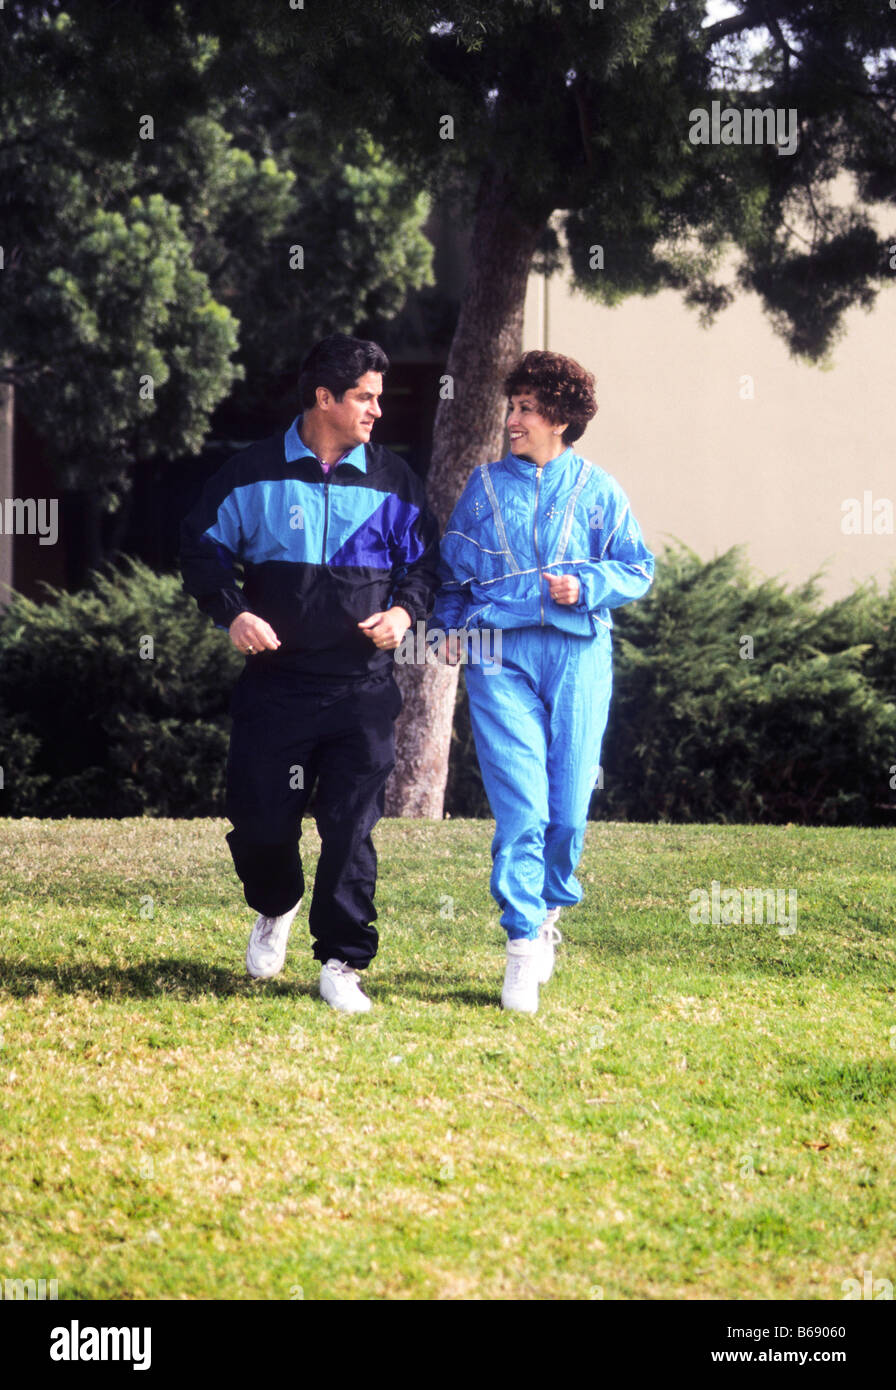 Hispanic couple in exercise clothing jog in park. Stock Photo